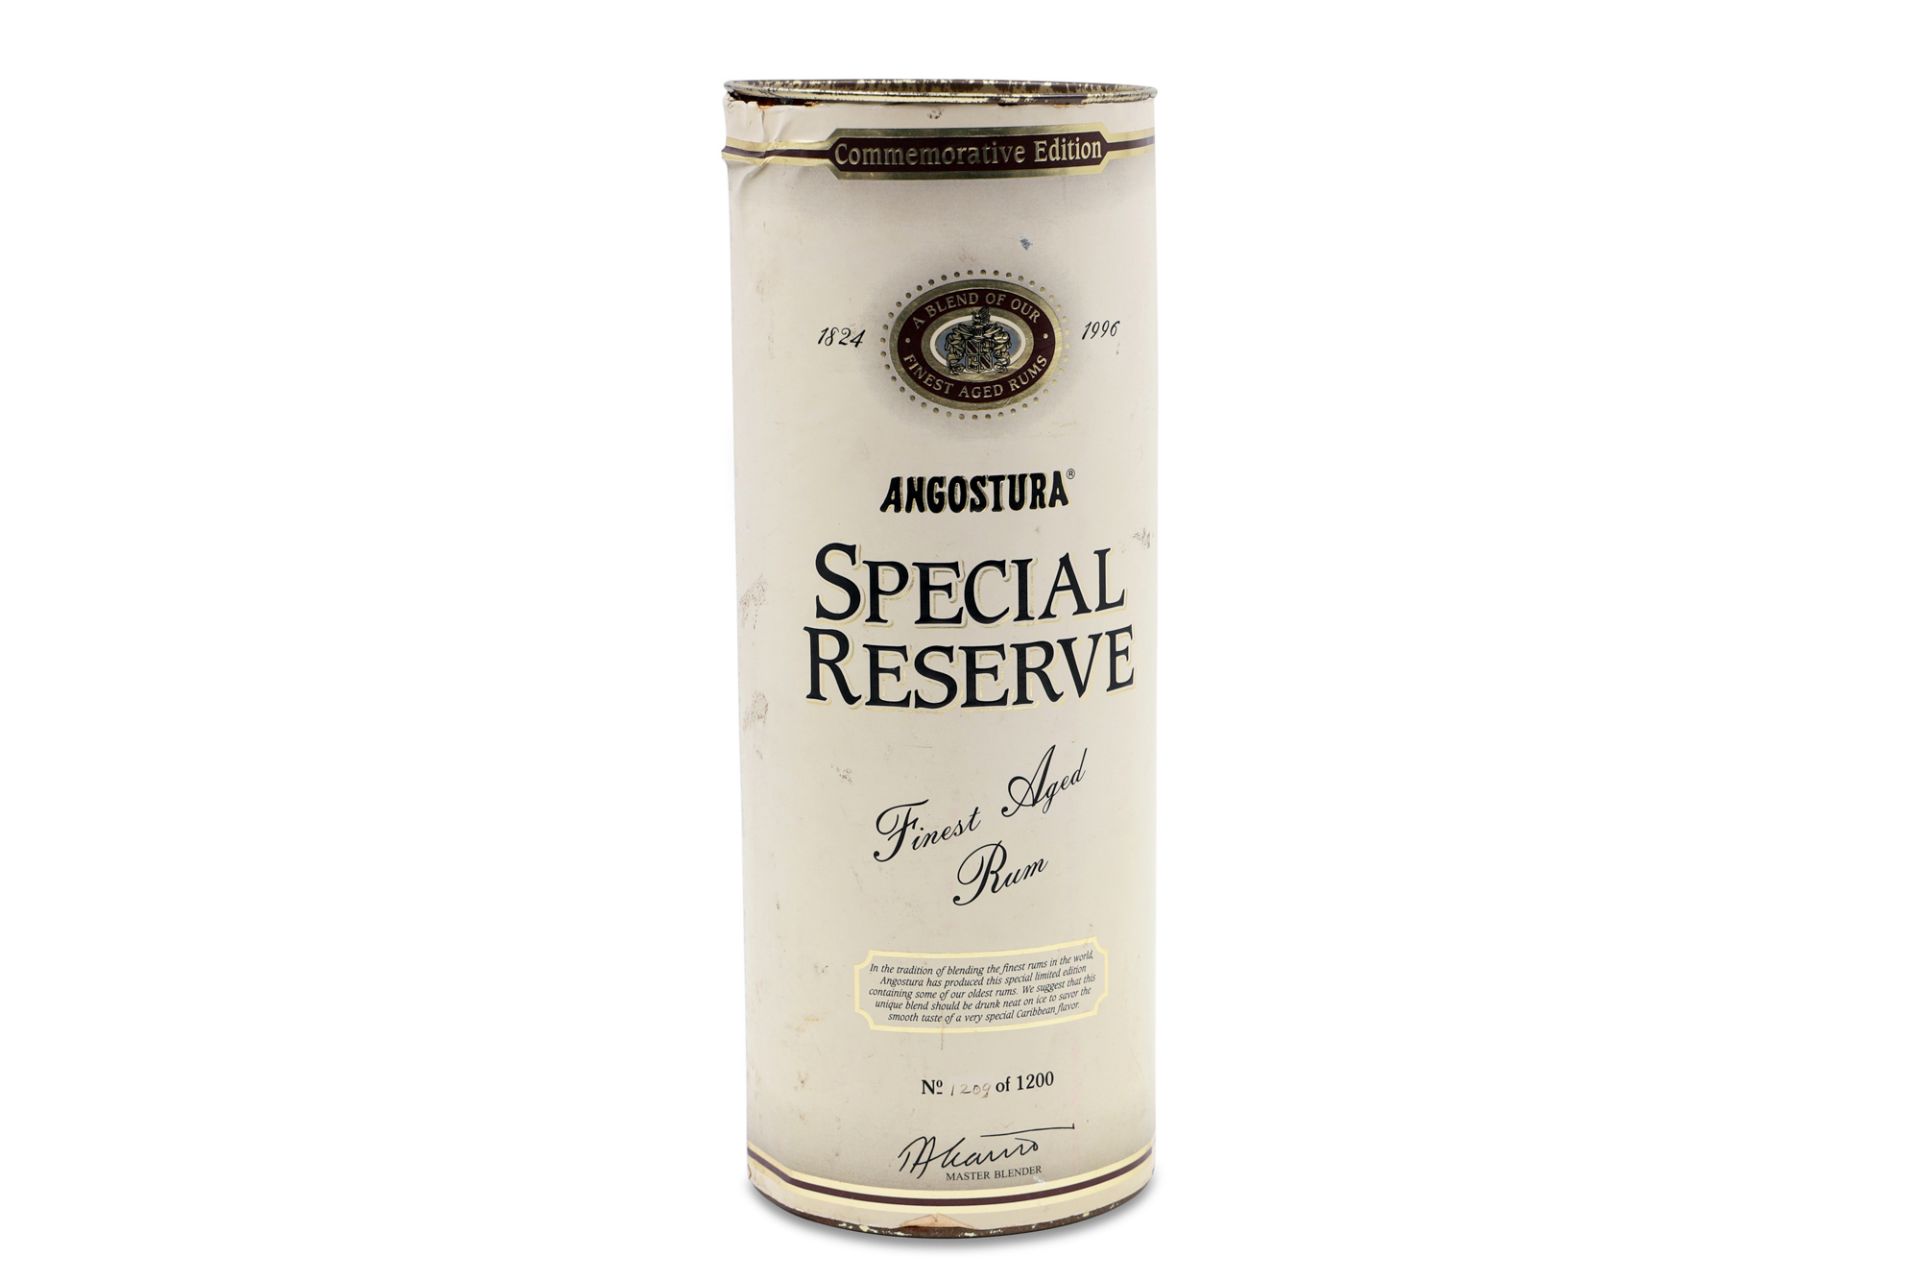 ANGOSTURA (1824 - 1996) commemorative edition, special reserve, fine aged rum, Ltd edition 1209 of